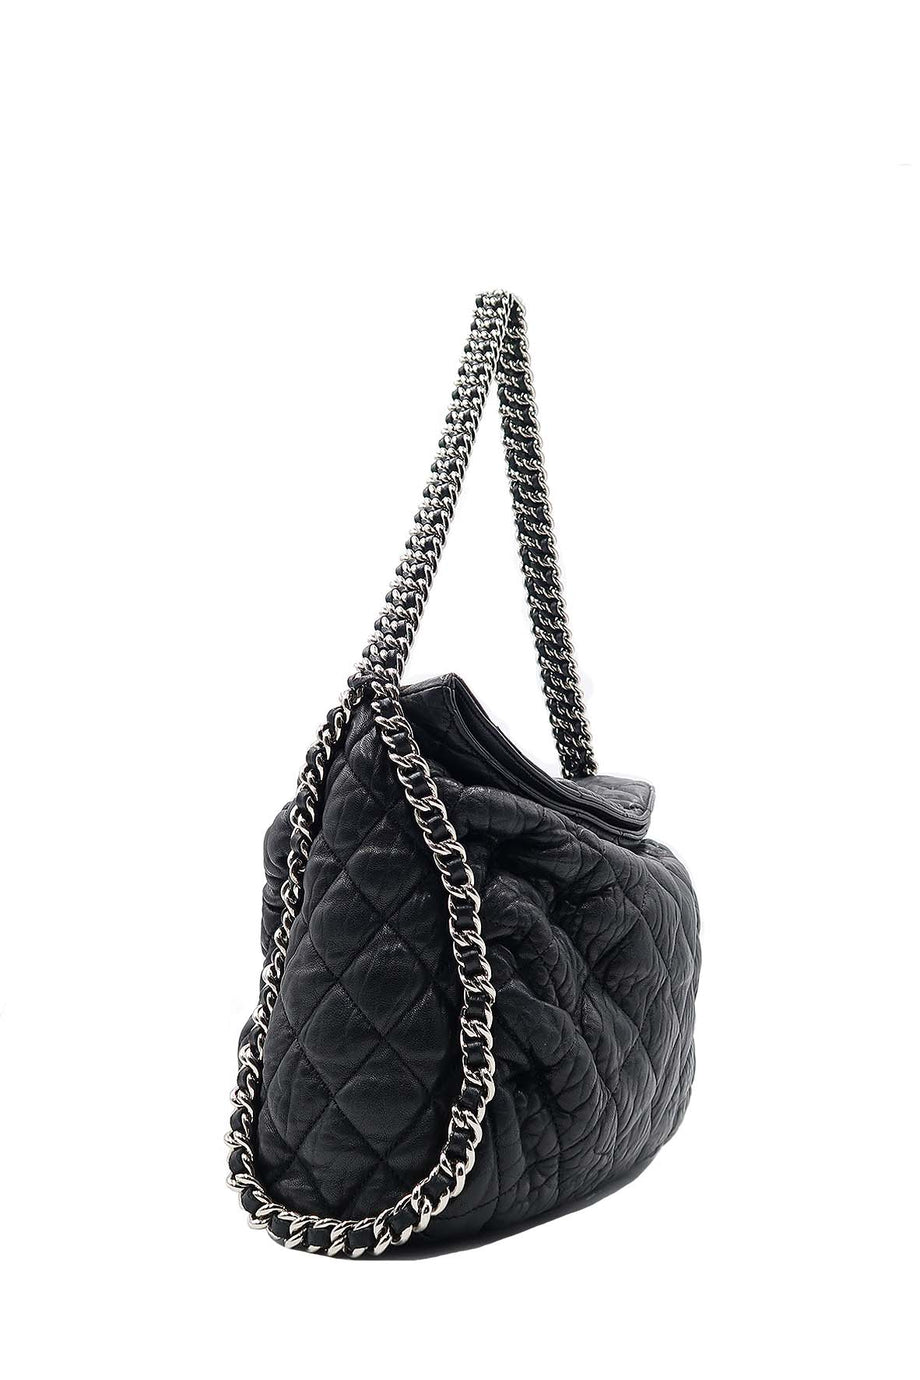 chanel chain around hobo bag